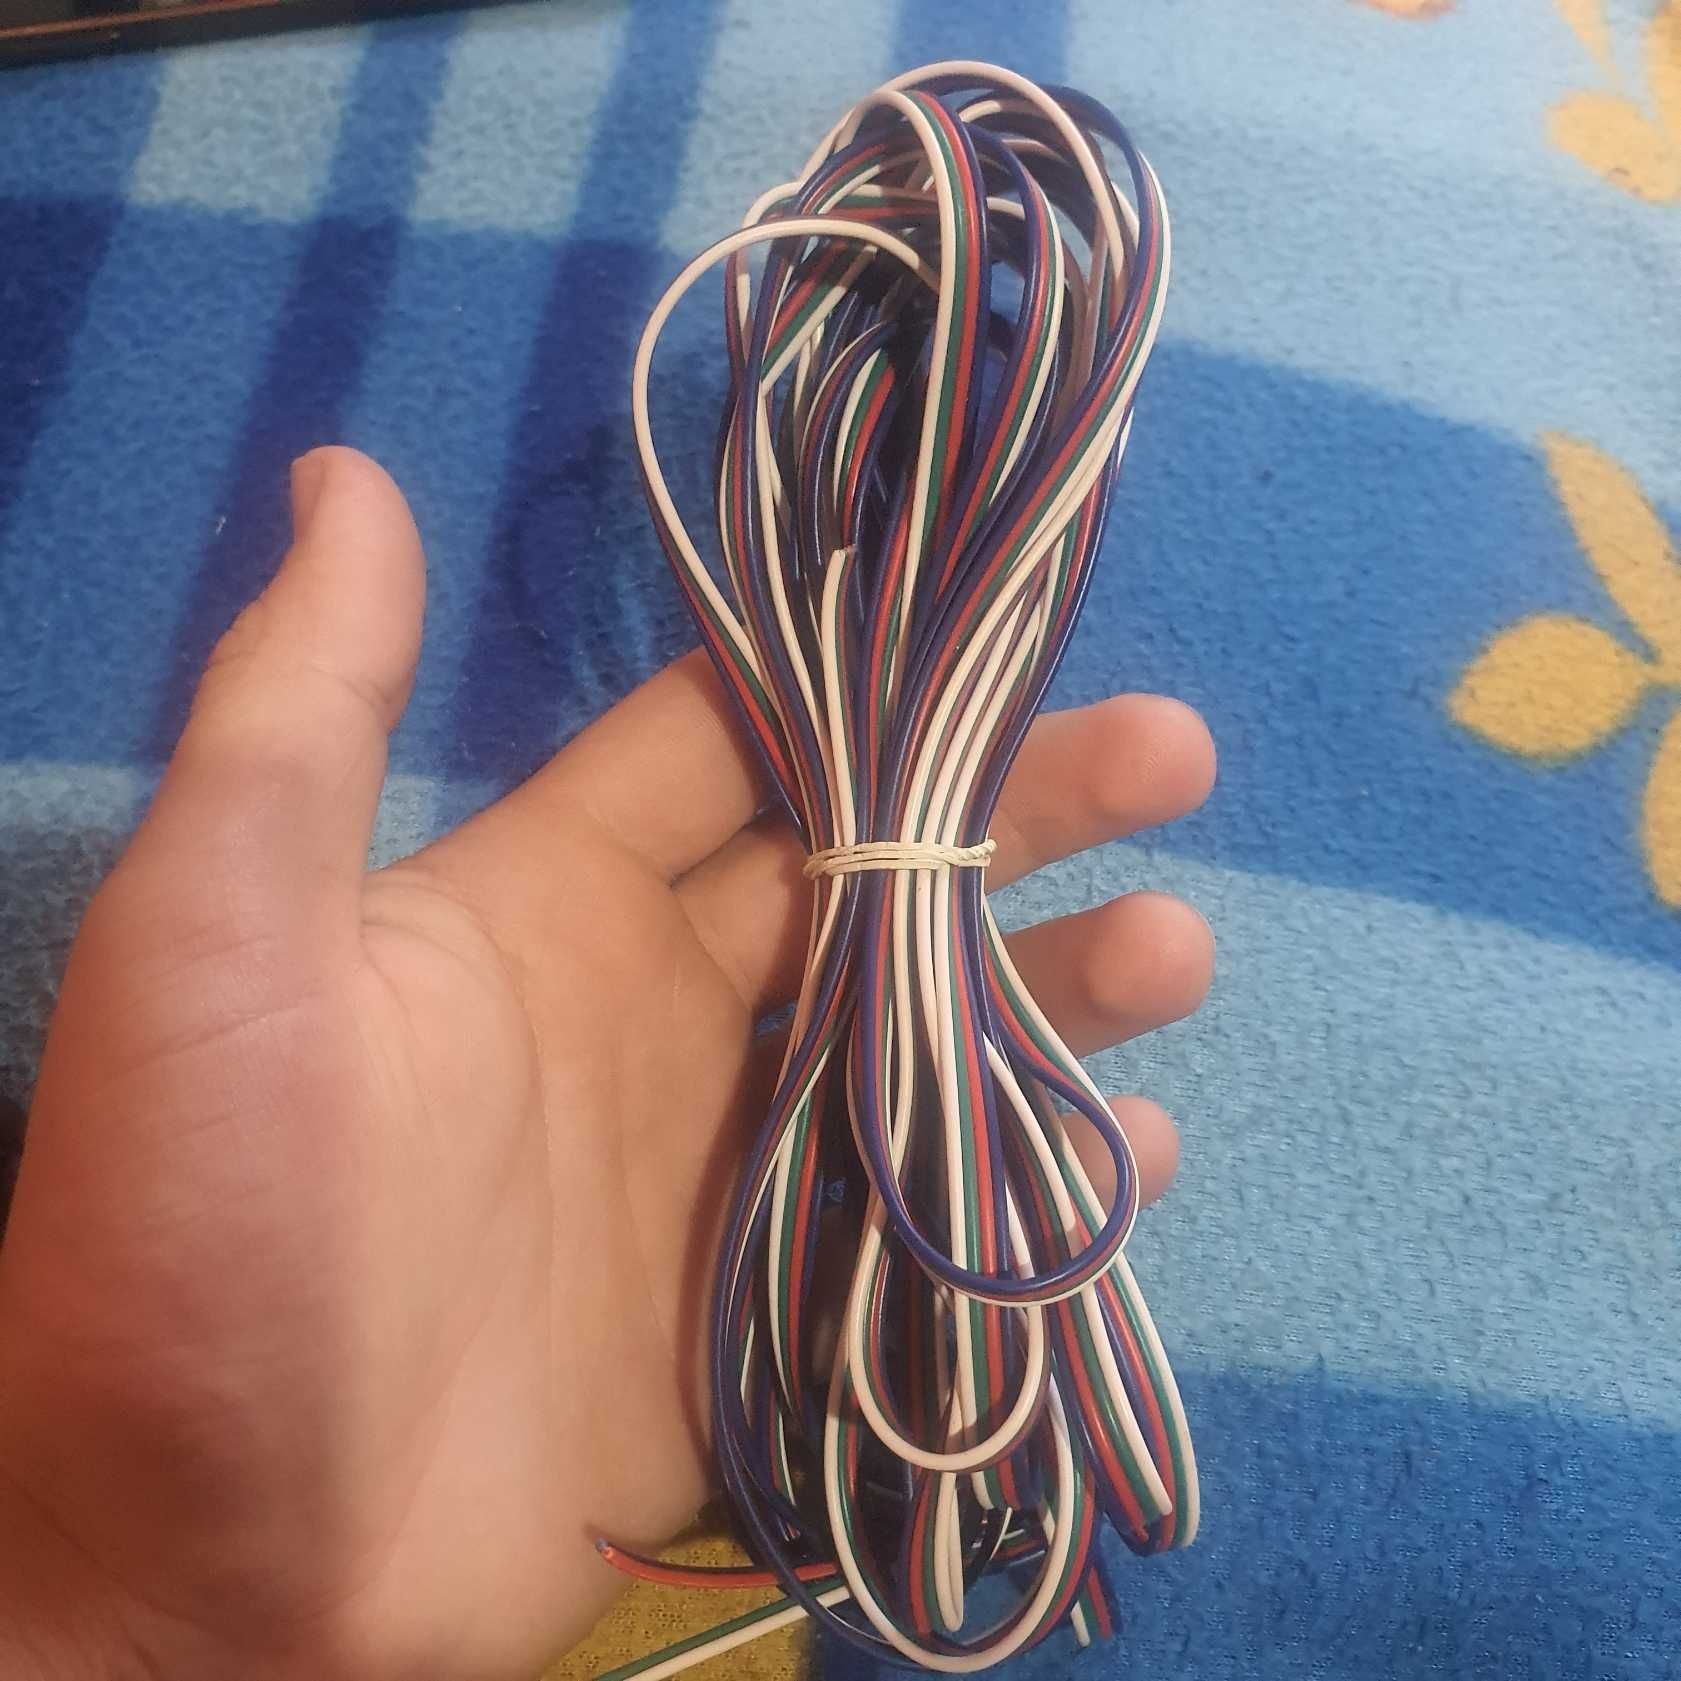 Cablu de conexiune banda LED RGB-Mufe de conexiune rapida-Alimentare